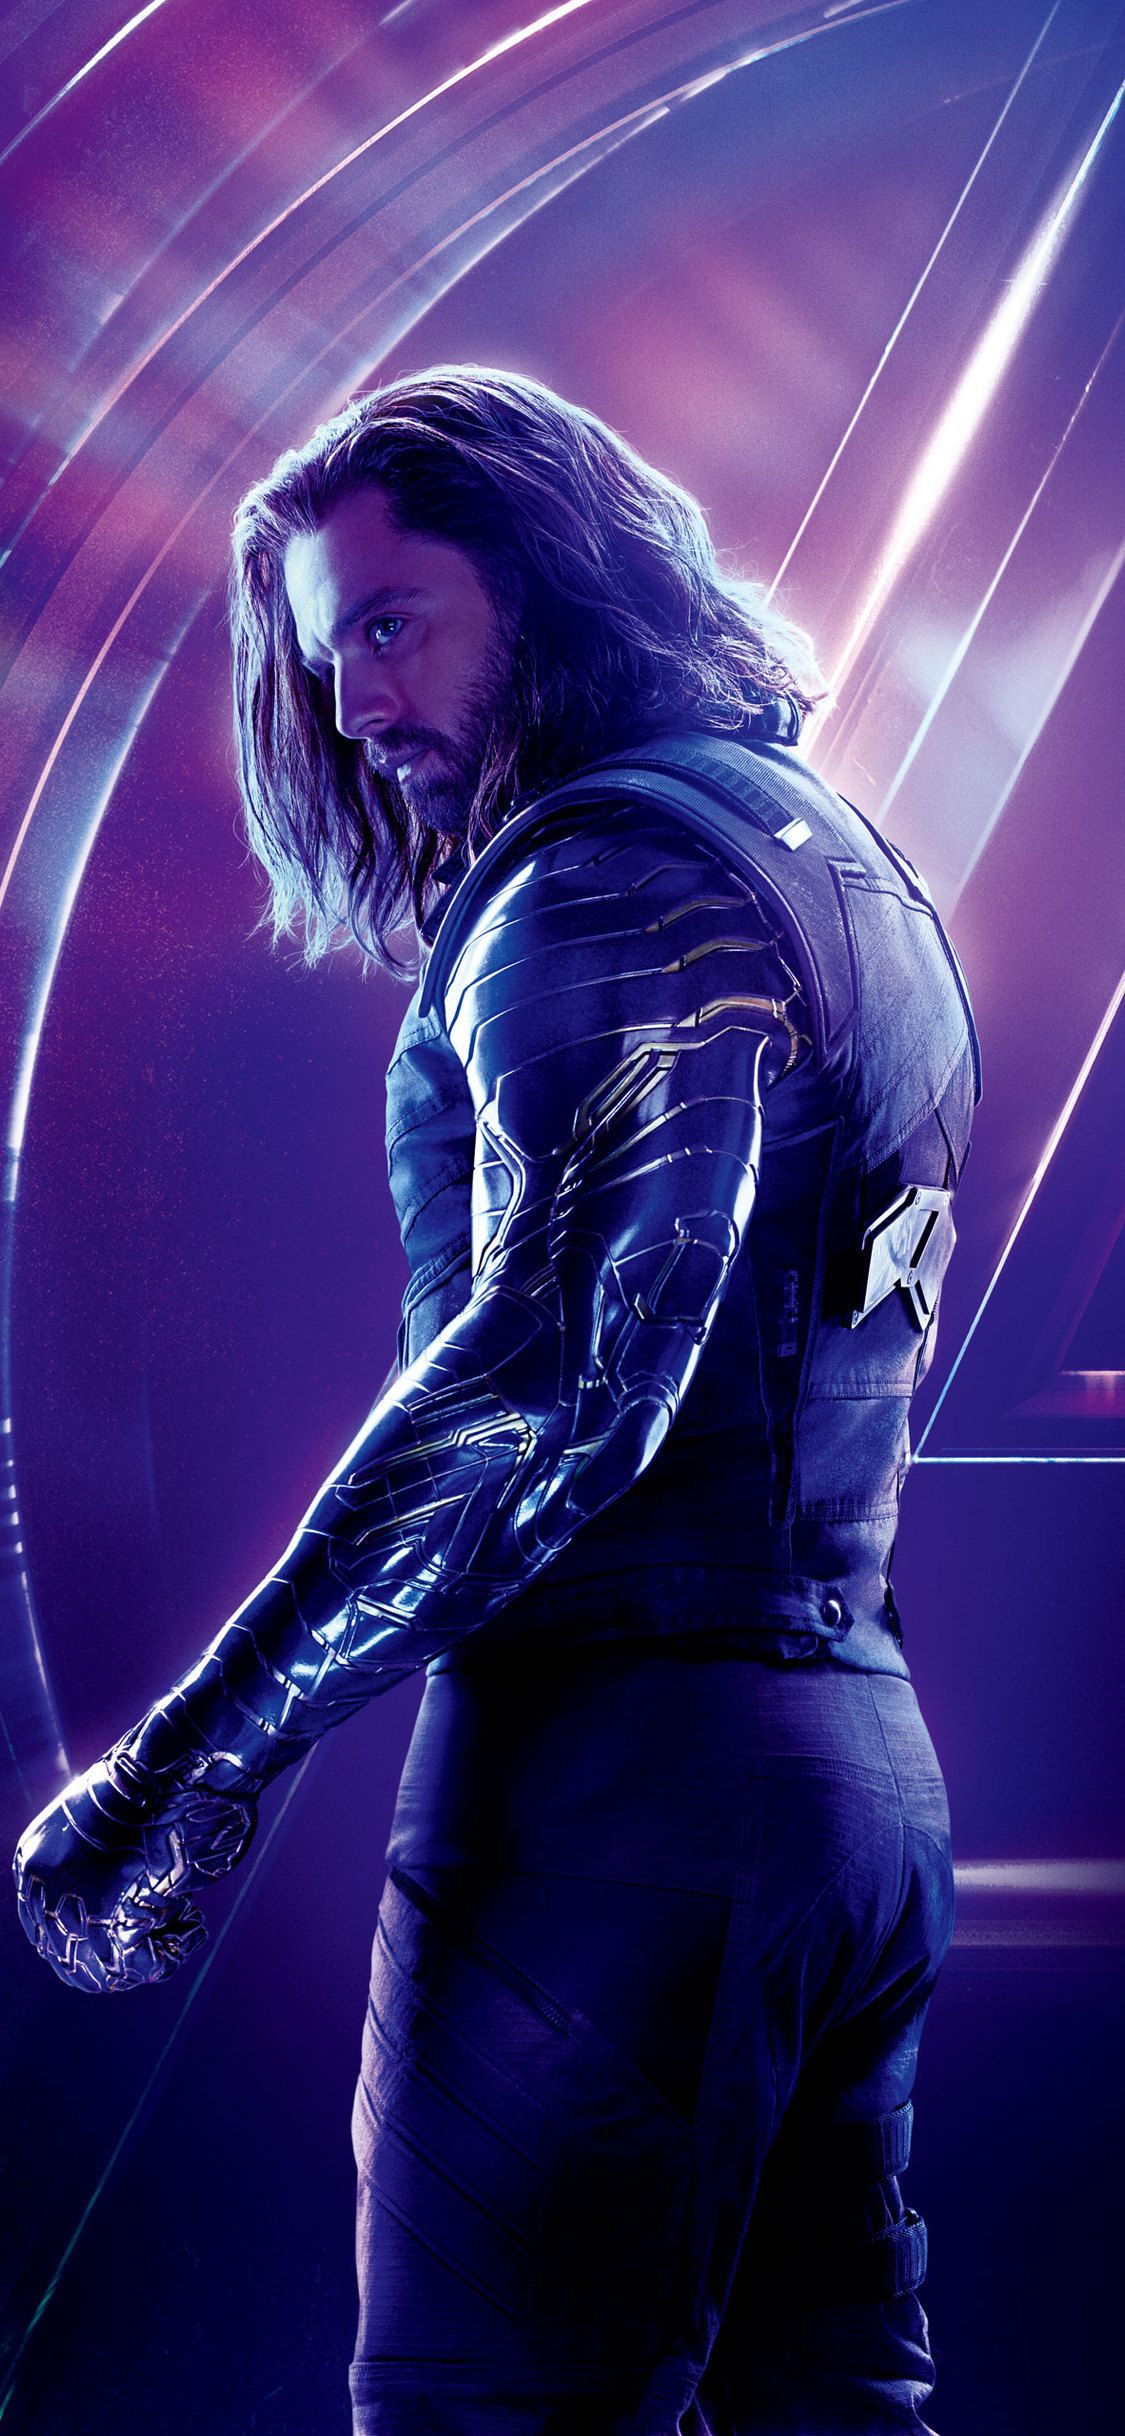 Bucky Barnes In Avengers Infinity War 8k Poster Wallpapers |